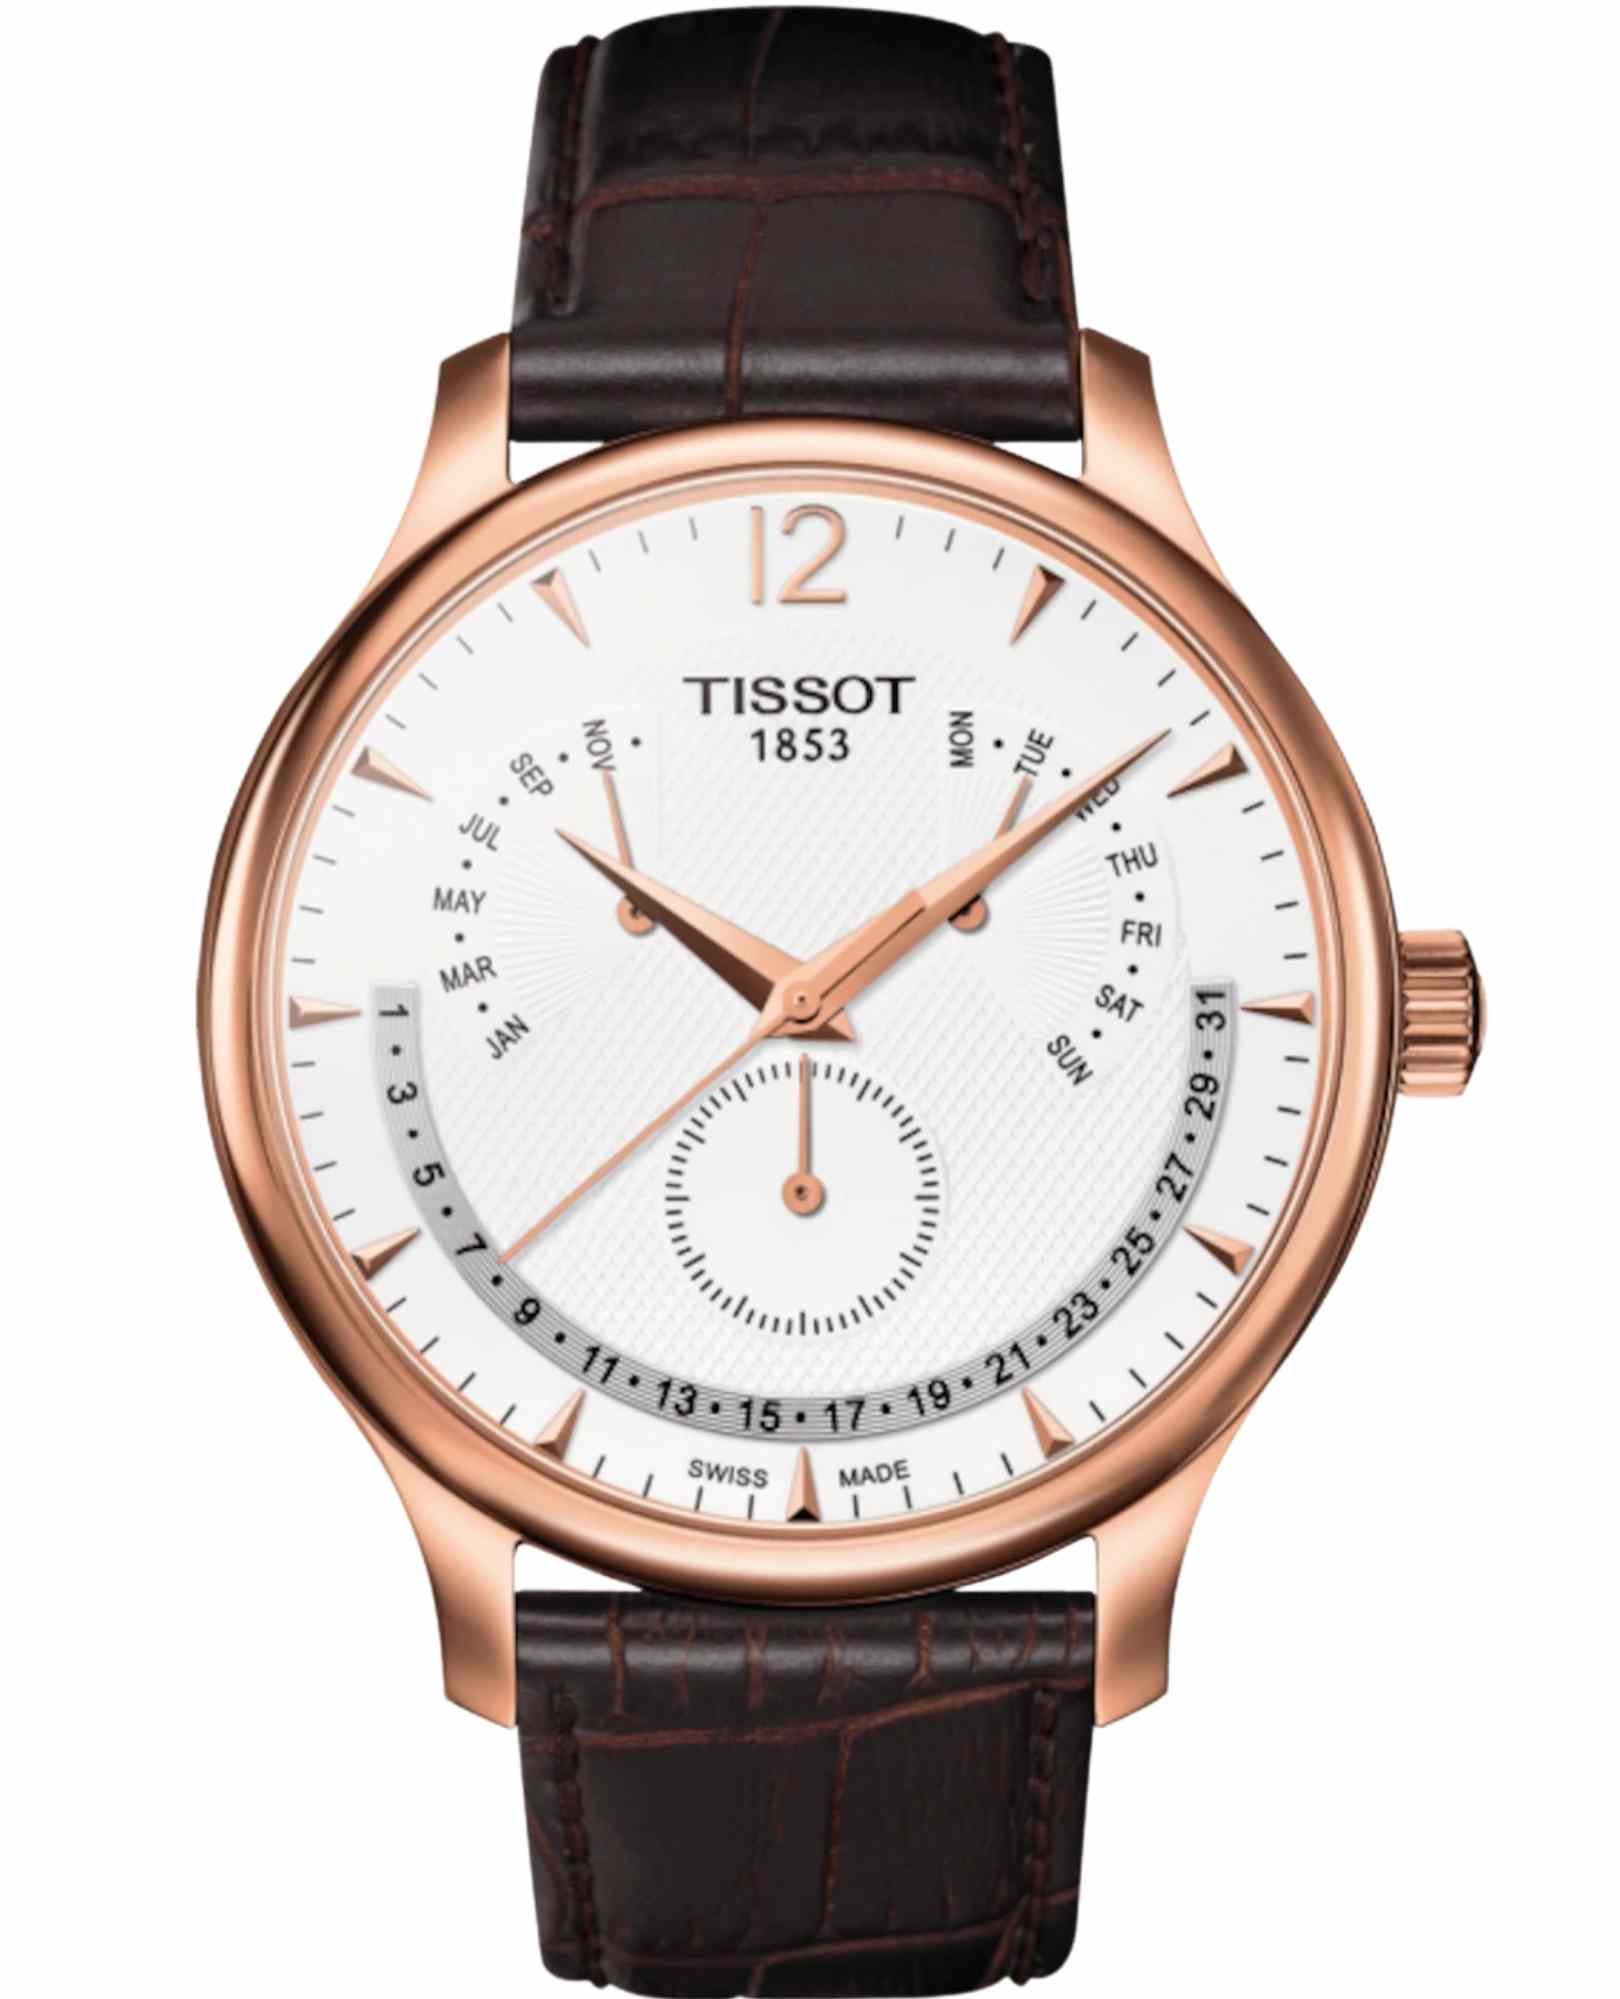 Relógio Tissot Tradition Perpetual Calendar Ouro Rosa T063.637.36.037.00